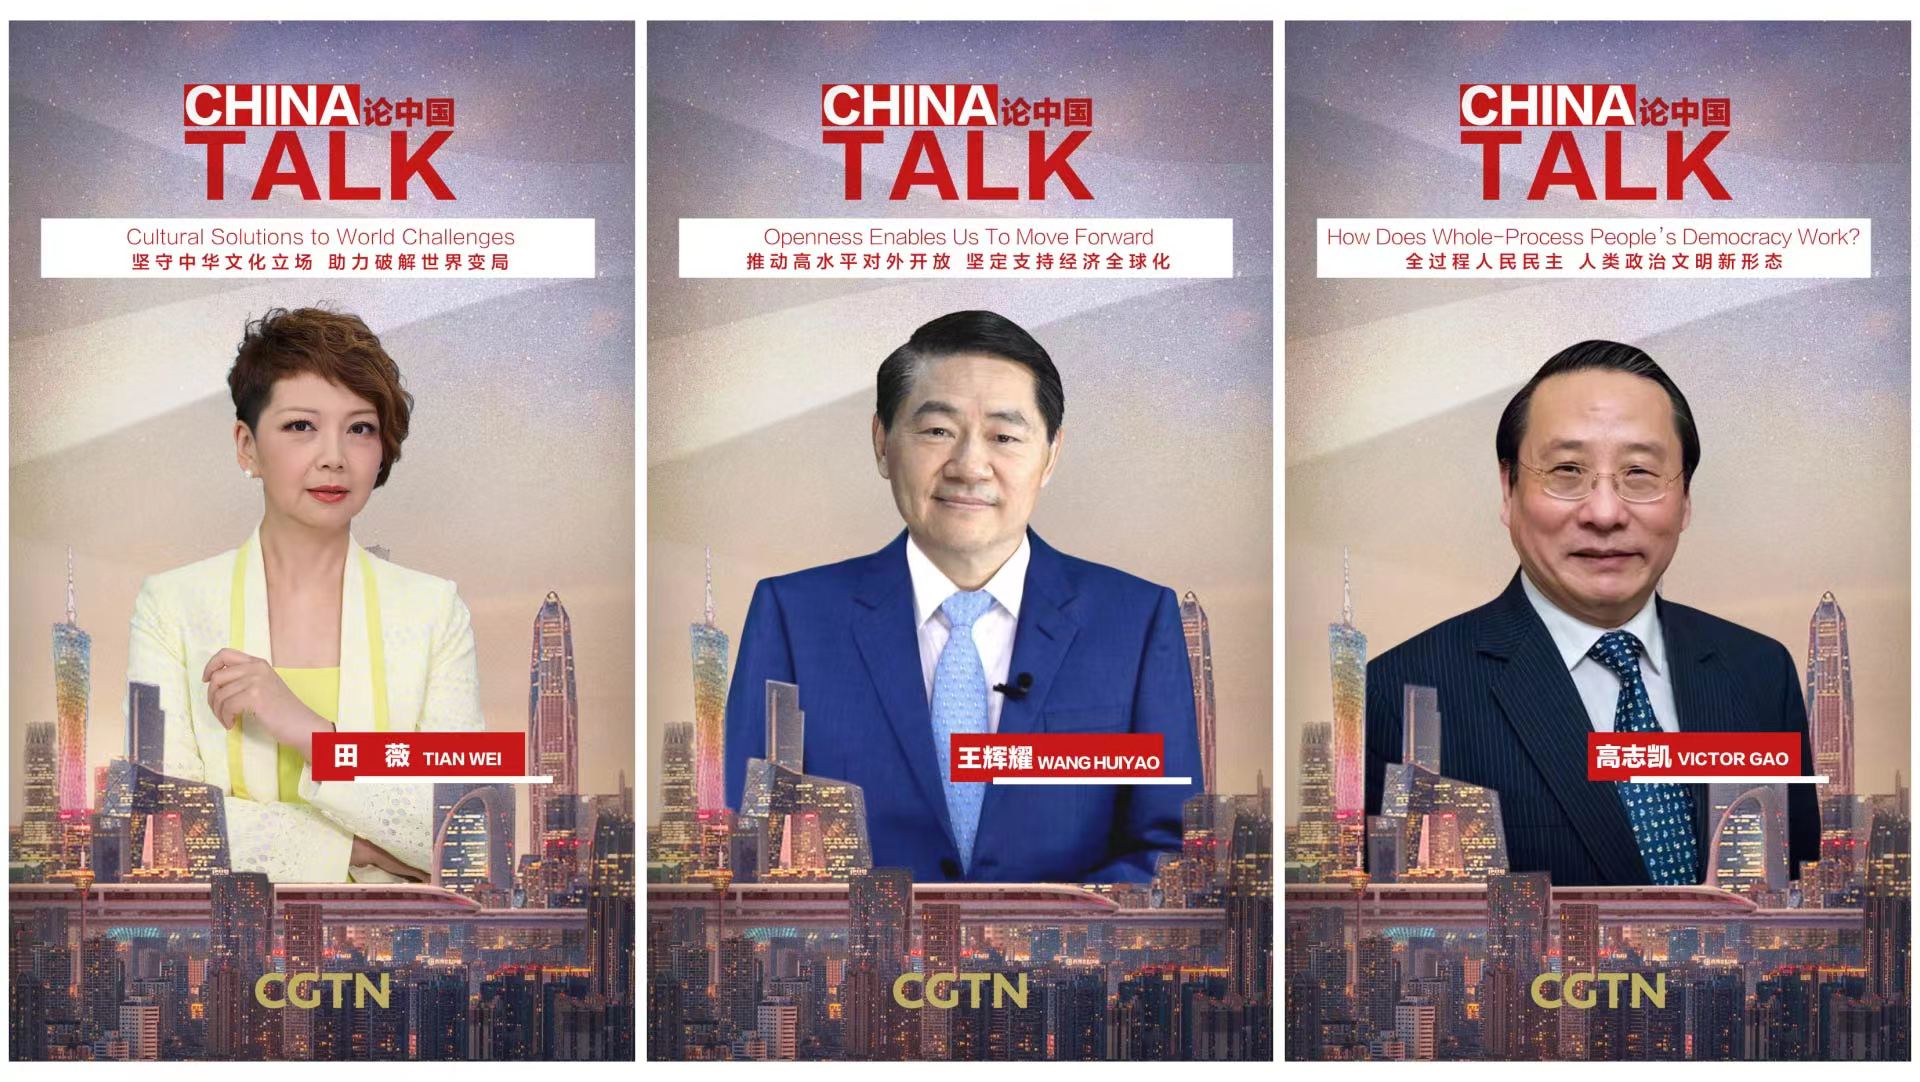 China Talk is coming CGTN